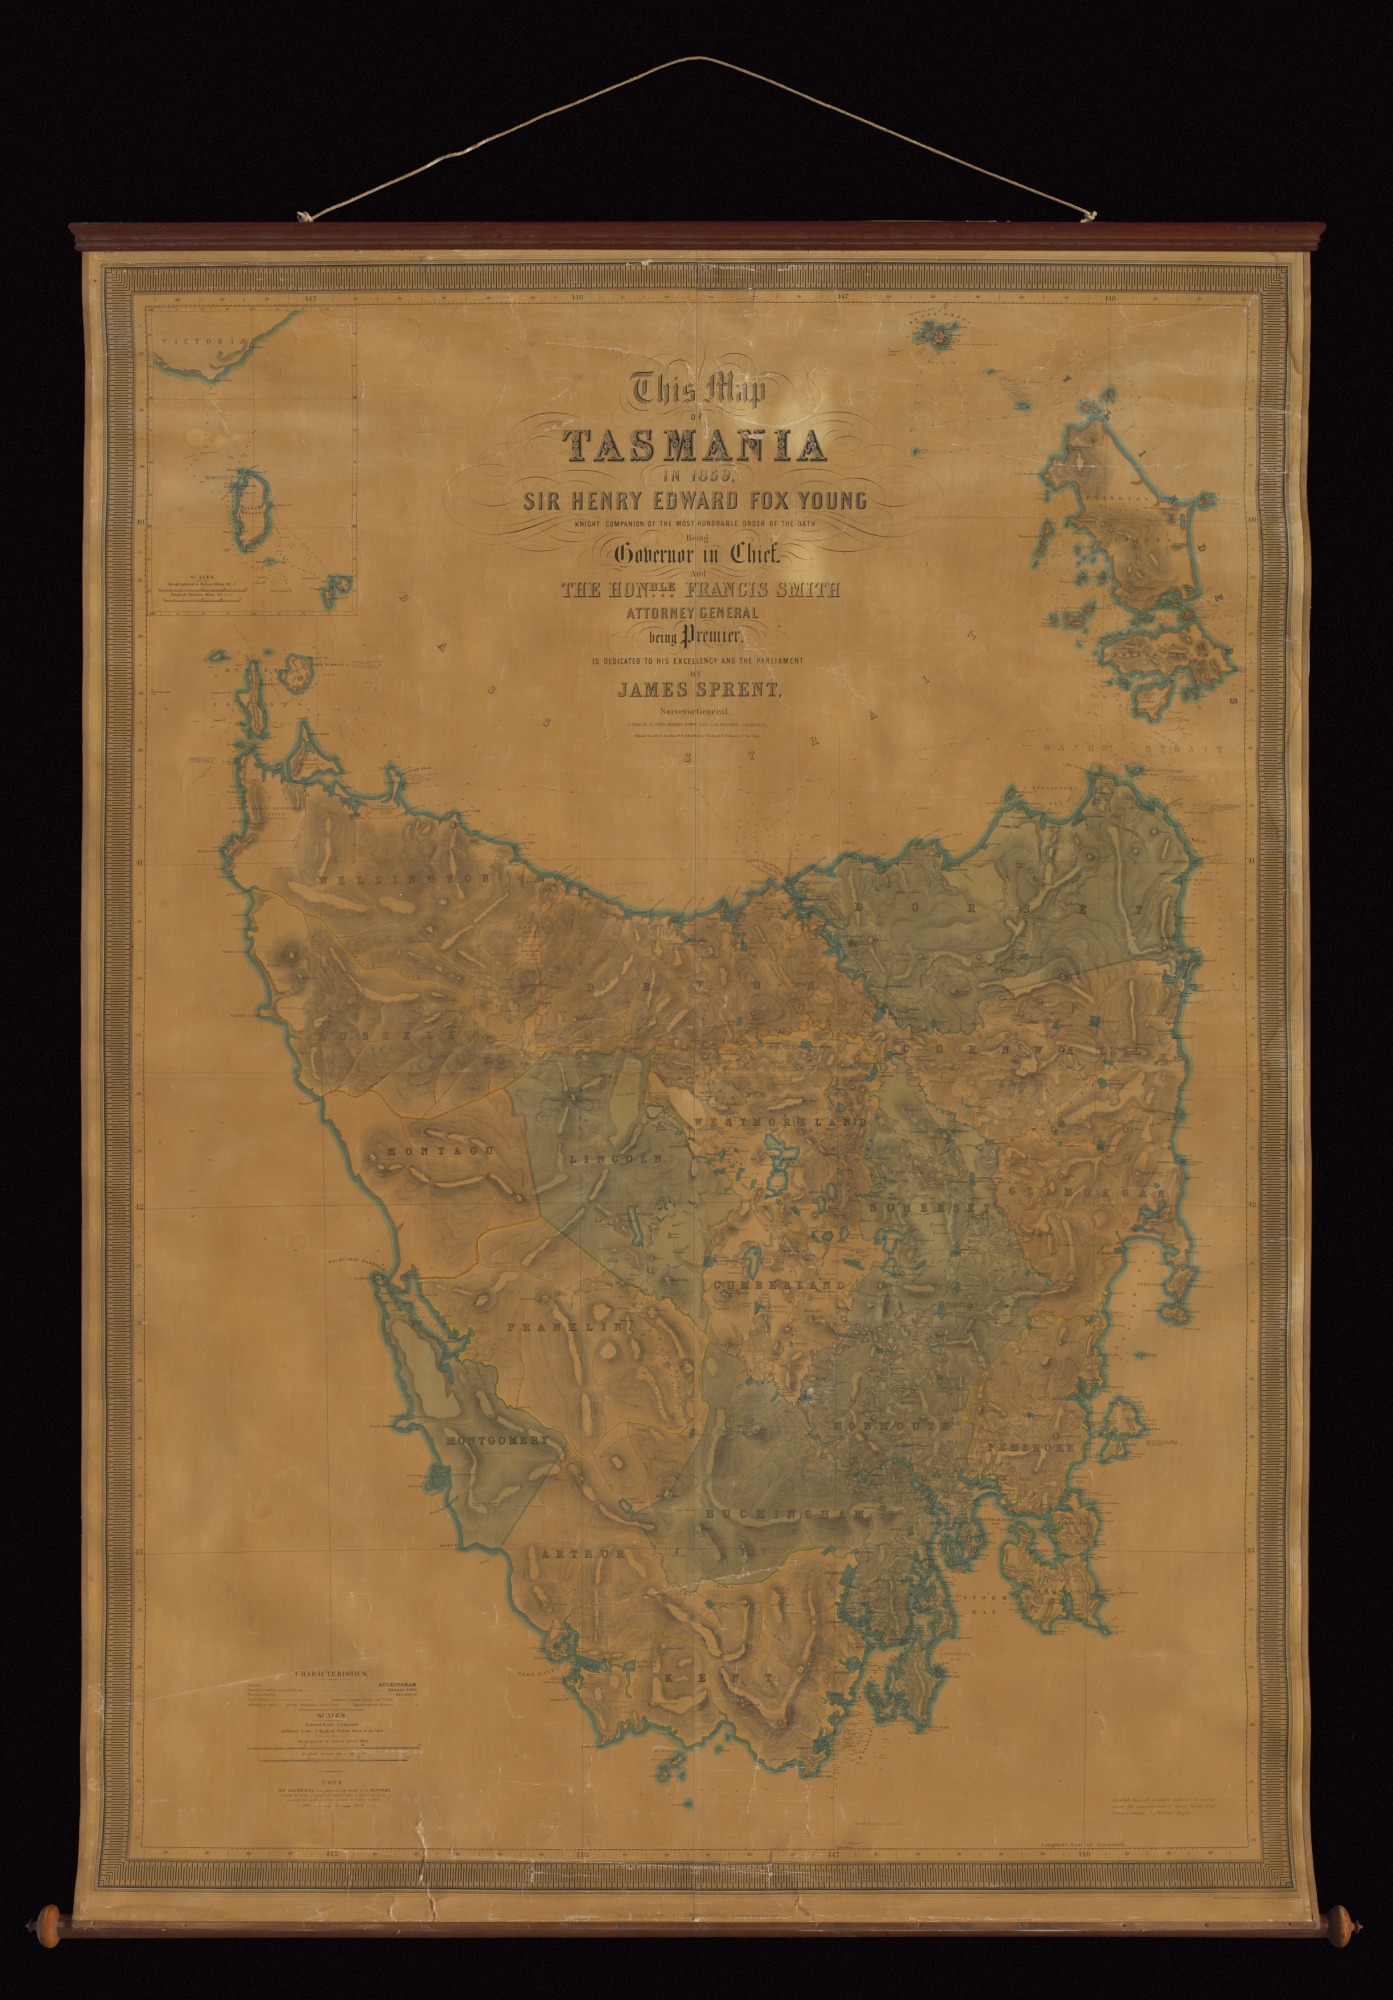 Map of Tasmania by James Sprent, 1859
